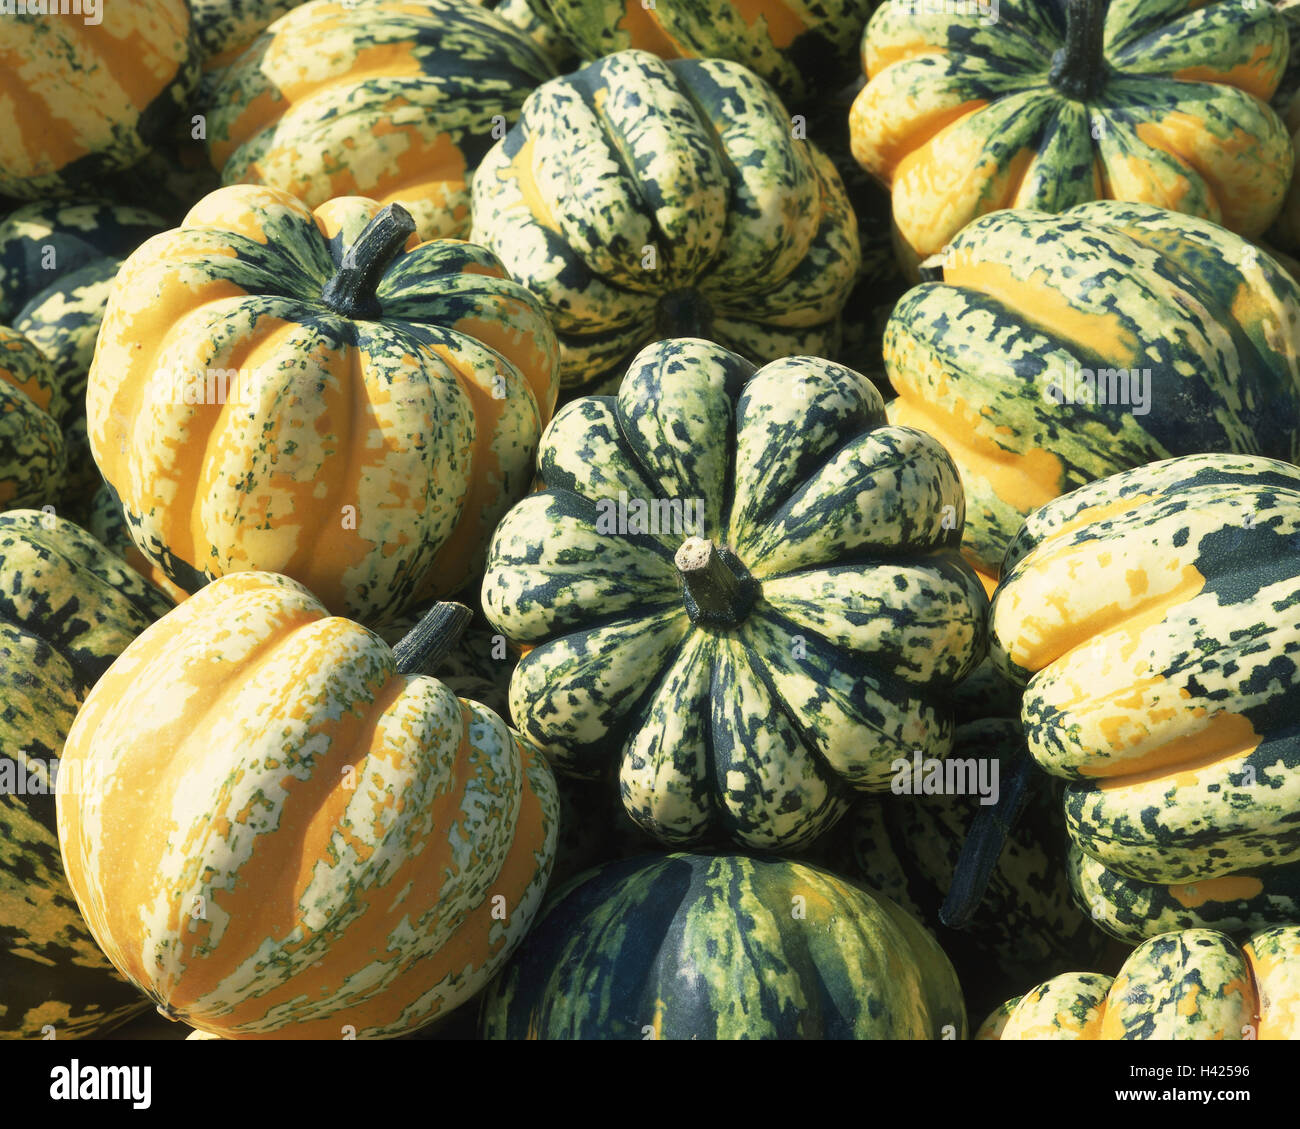 Ornamental pumpkins, ribbed, Still life, vegetables, pumpkins, ornamental pumpkin, Cucurbita, many, bichrome, green yellow, decoration, harvest time, autumn Stock Photo